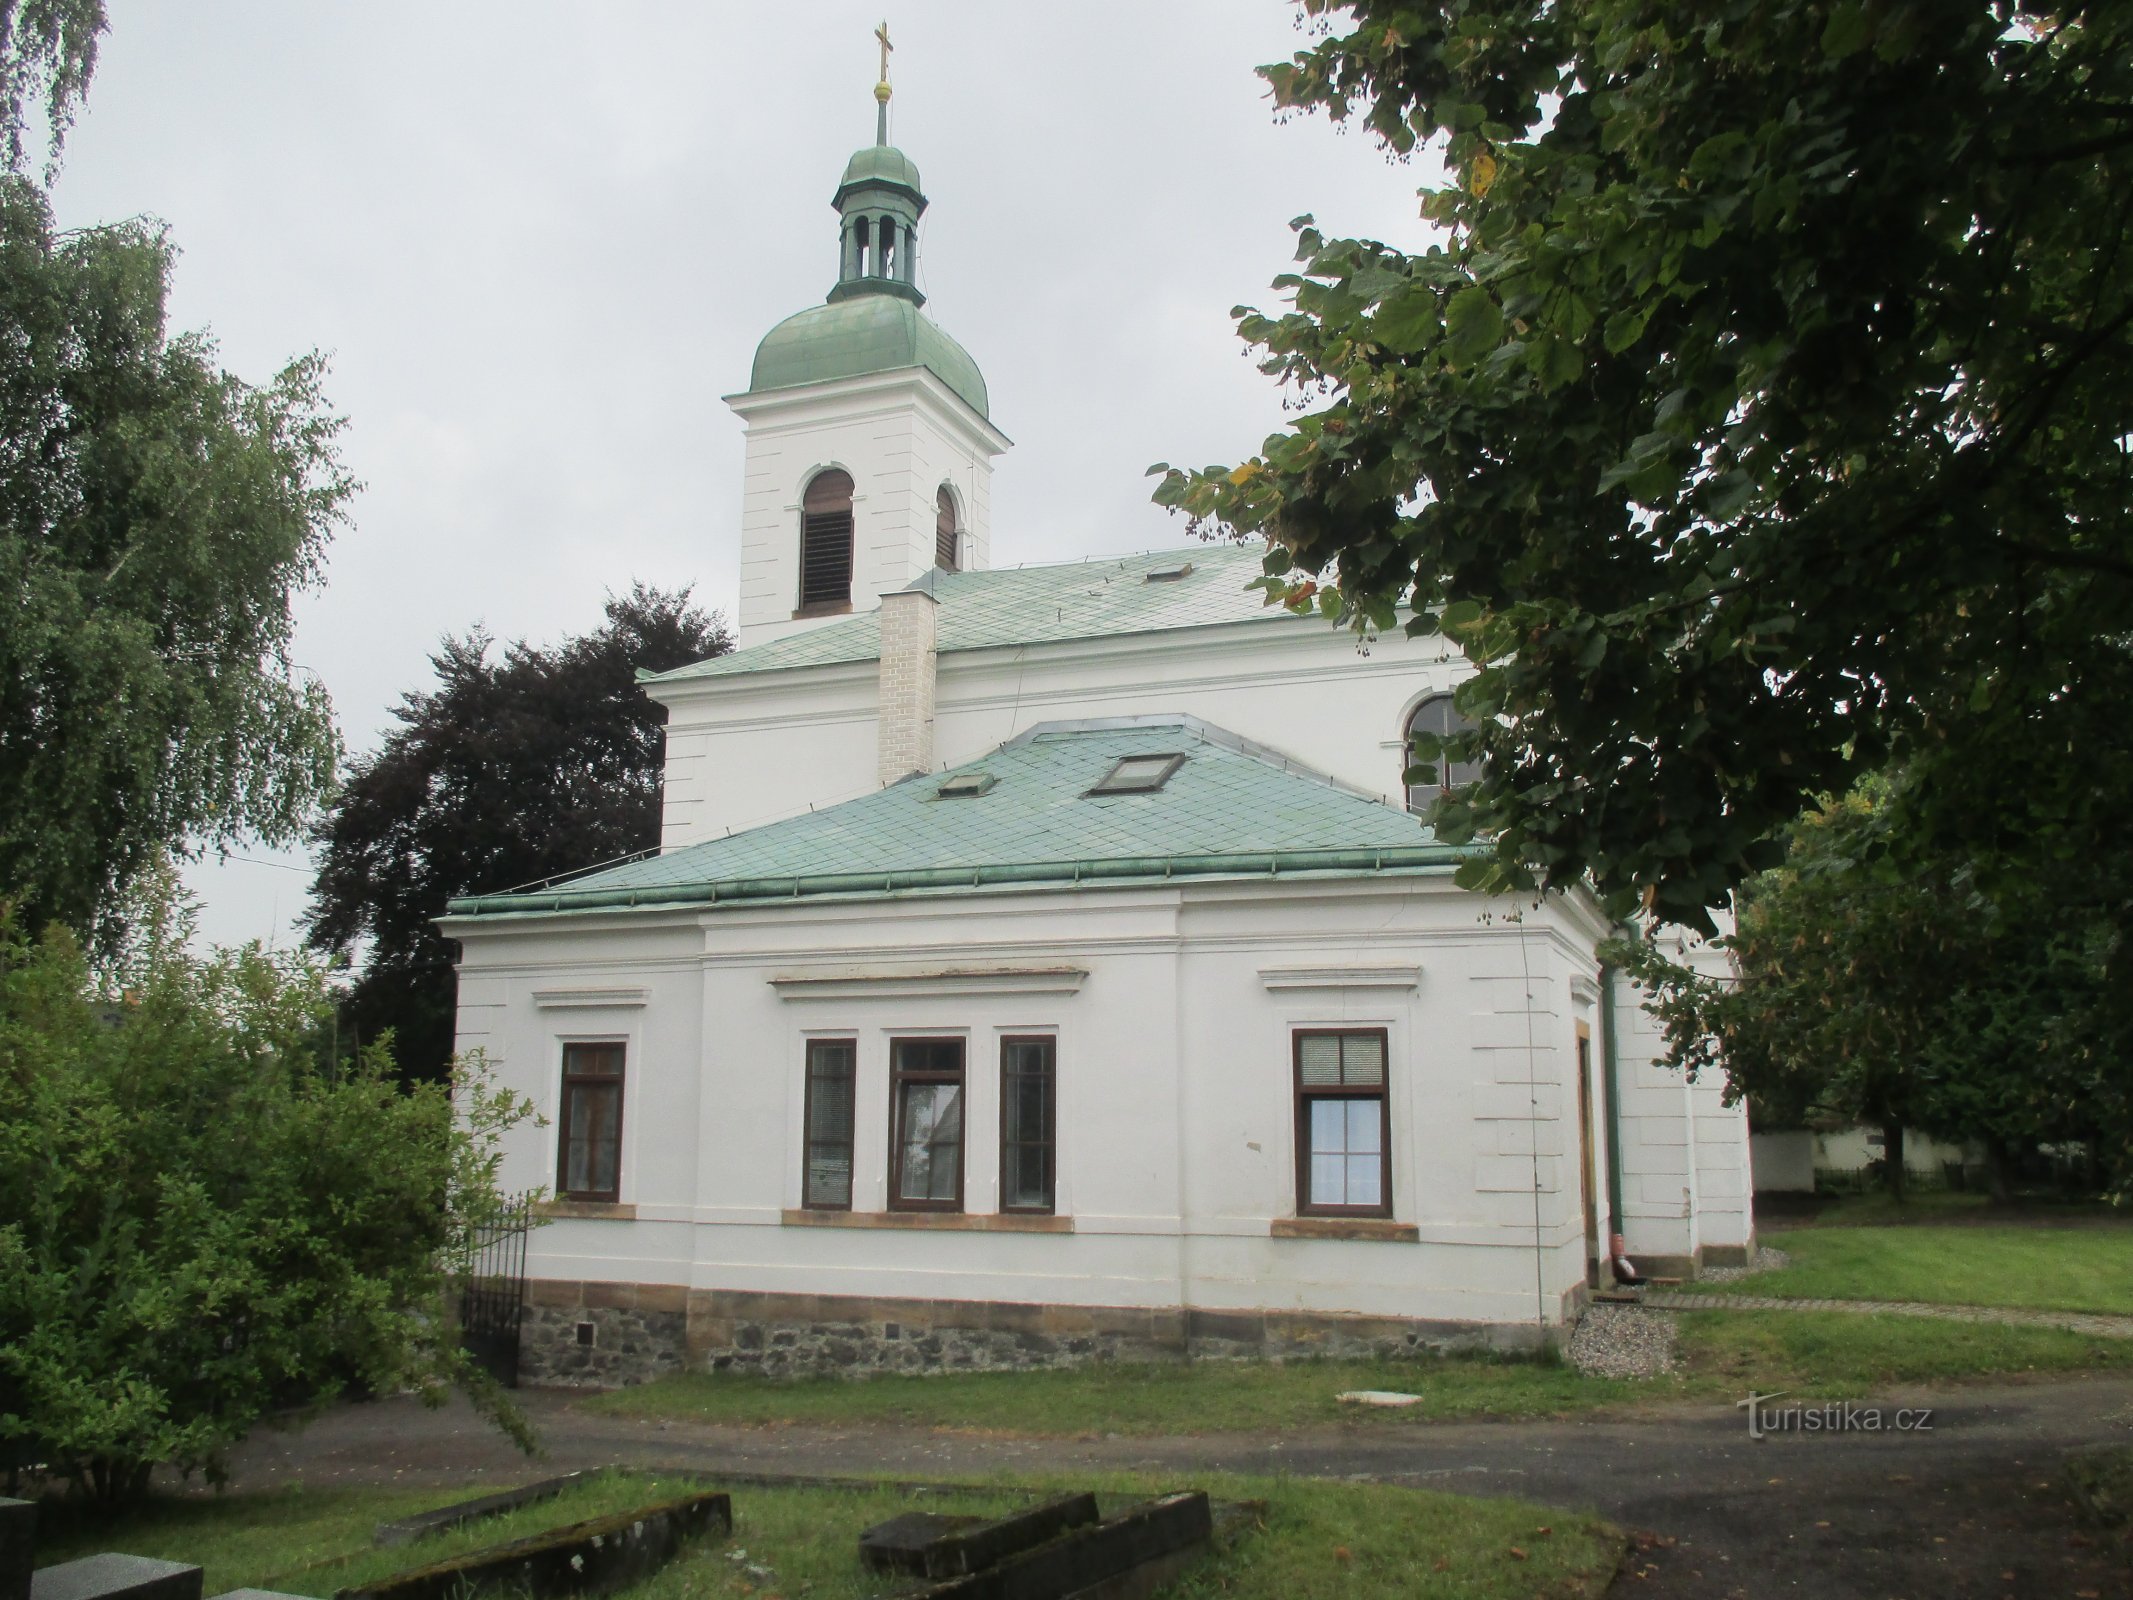 Nový Bor - Church of St. Spirit